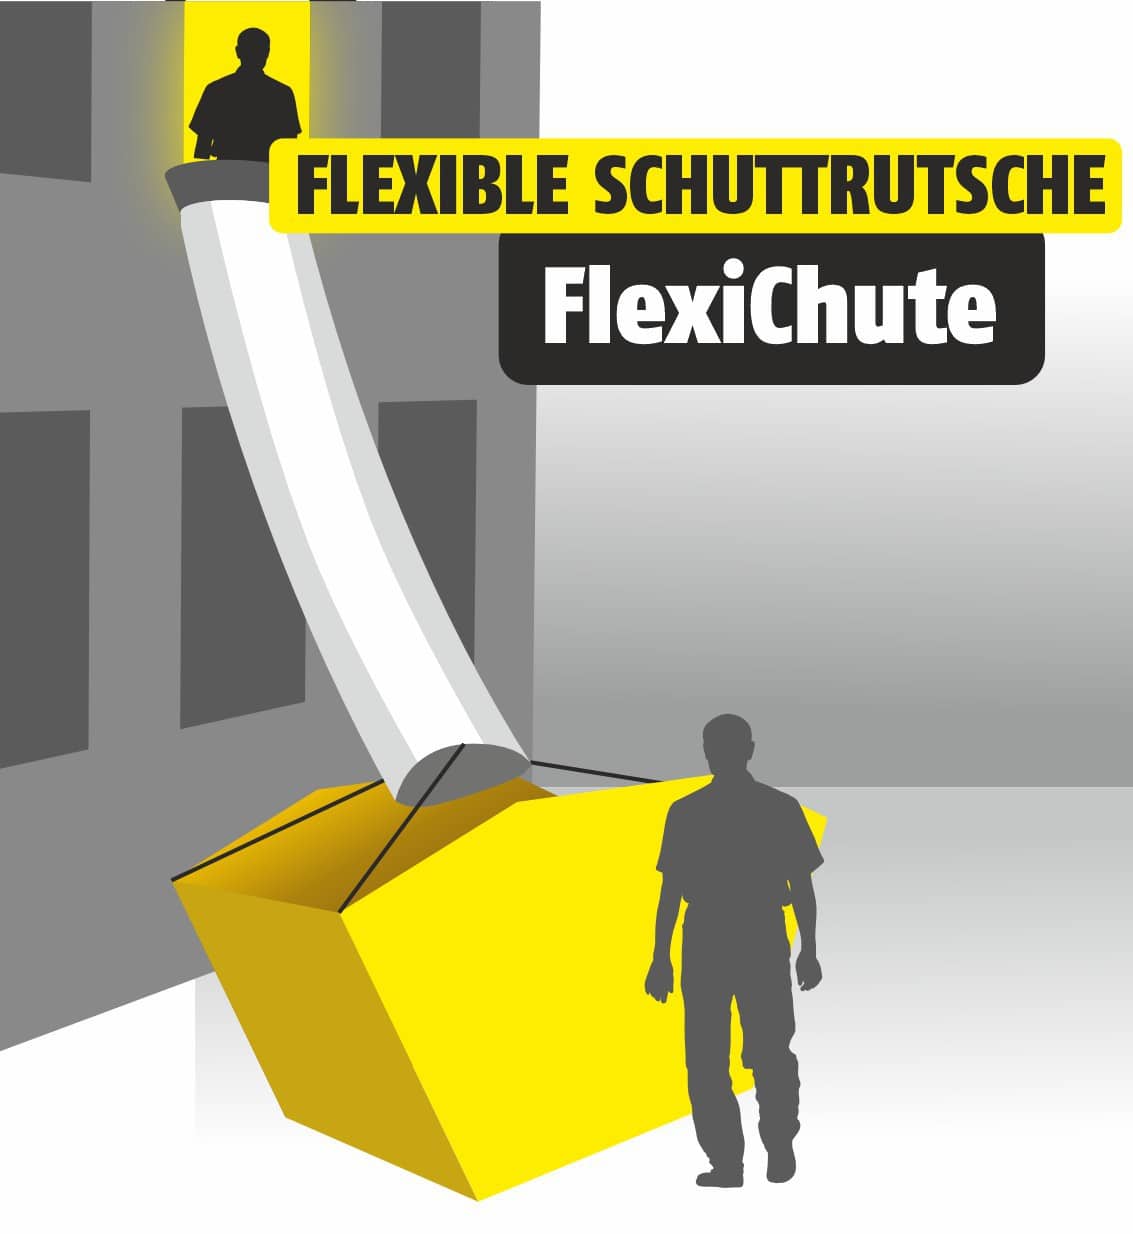 FlexiChute – handgefertigte flexible Schuttrutsche